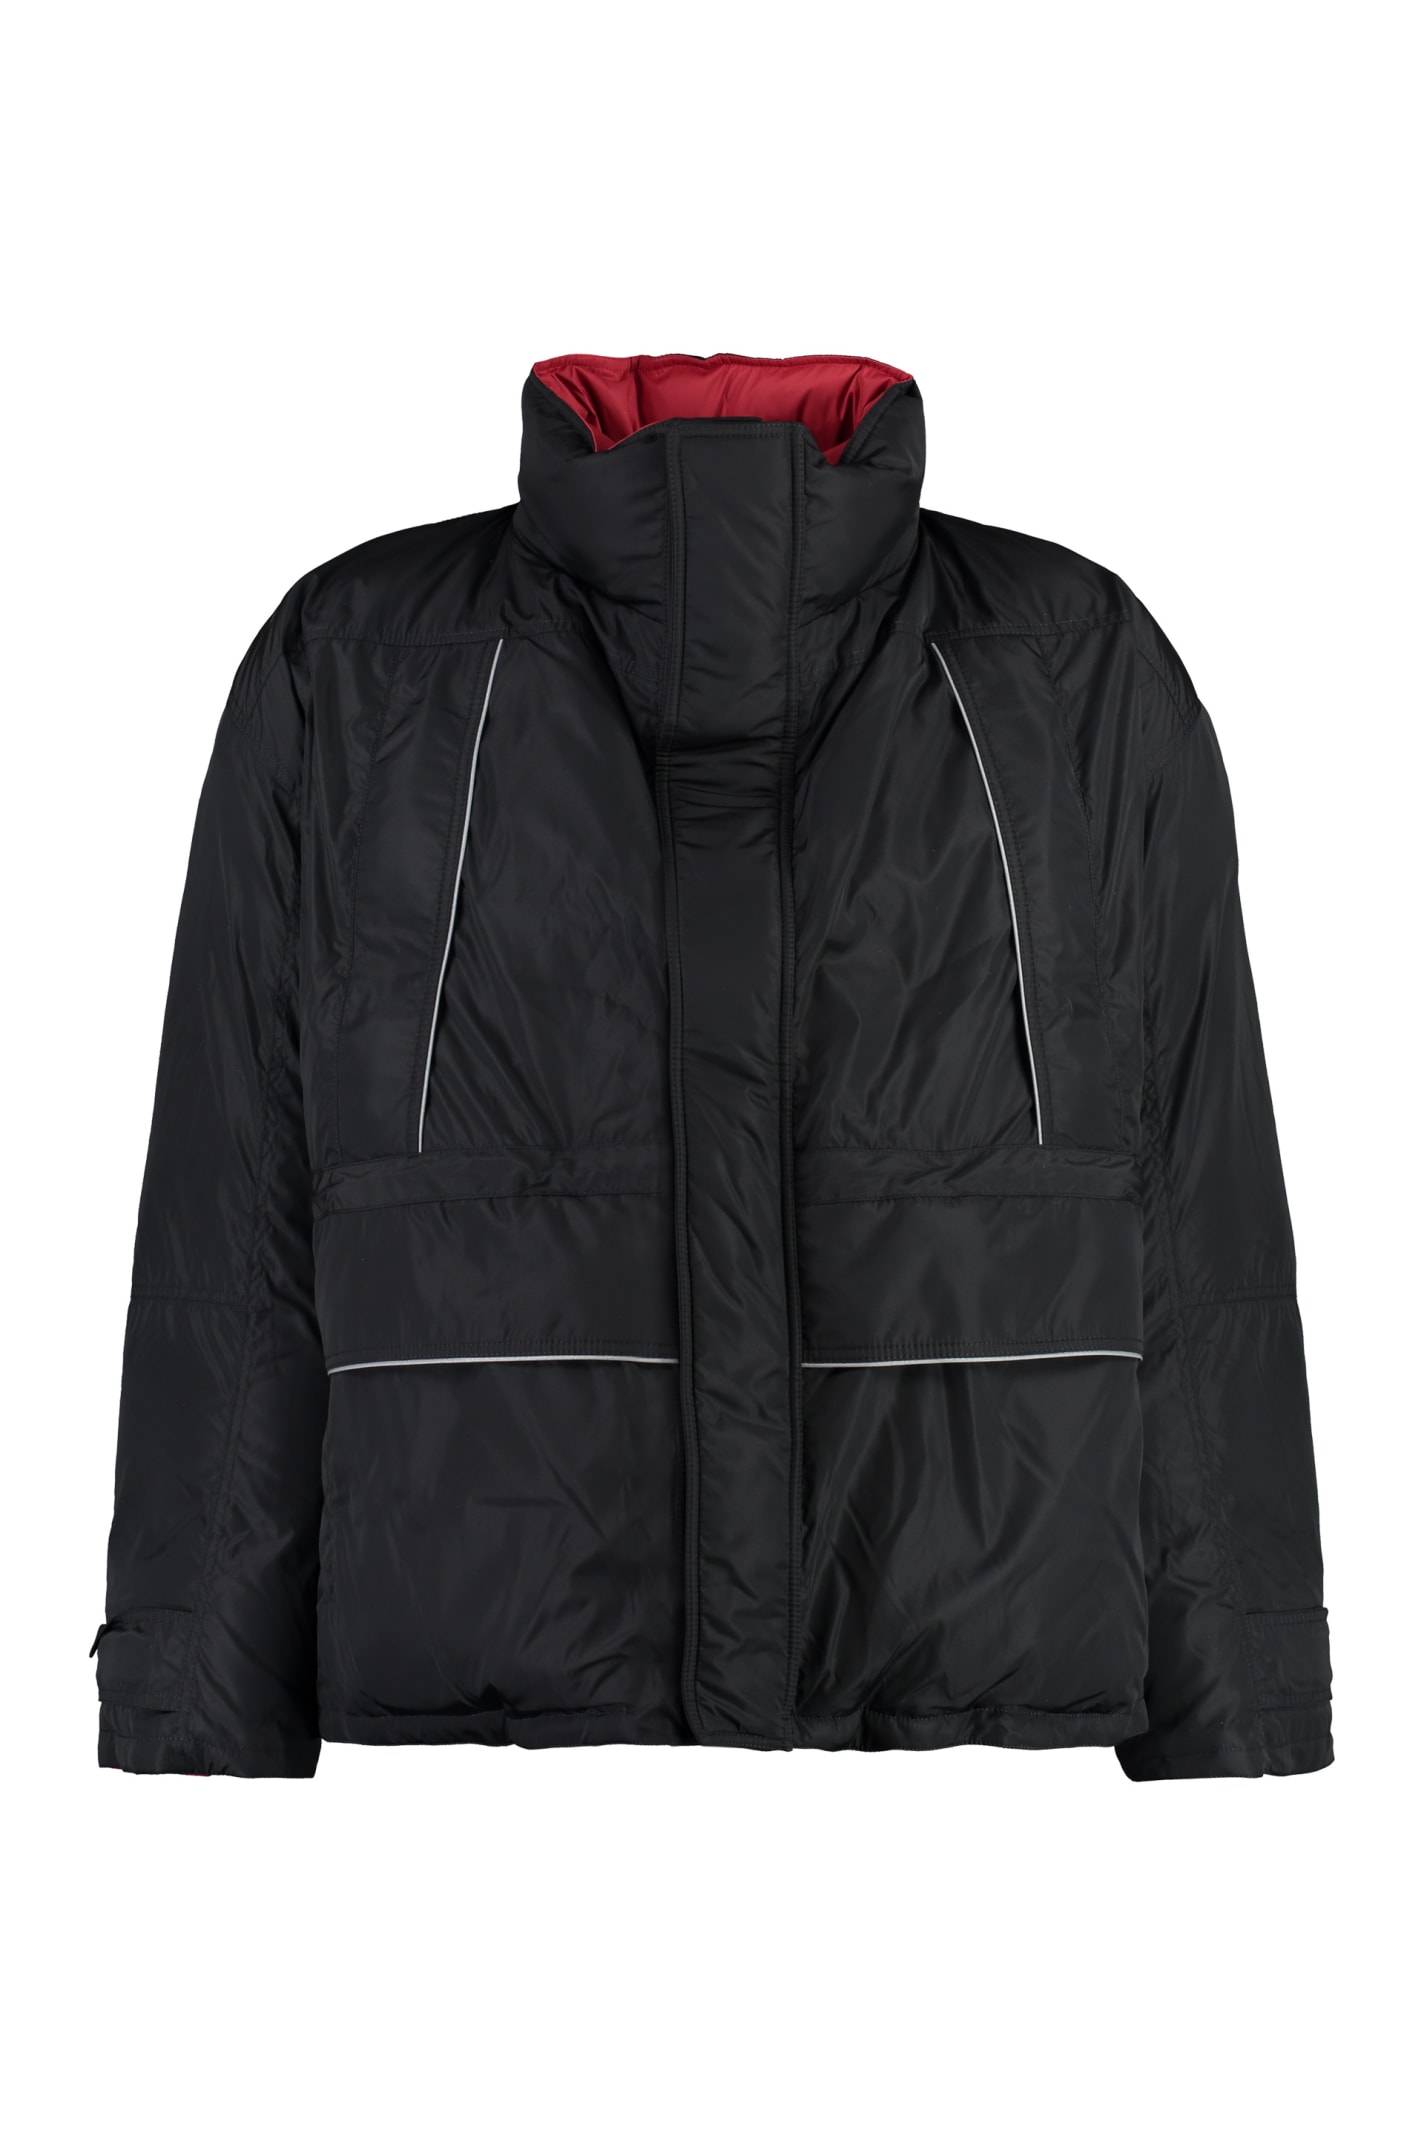 Shop Balenciaga Oversize Down Jacket In Black